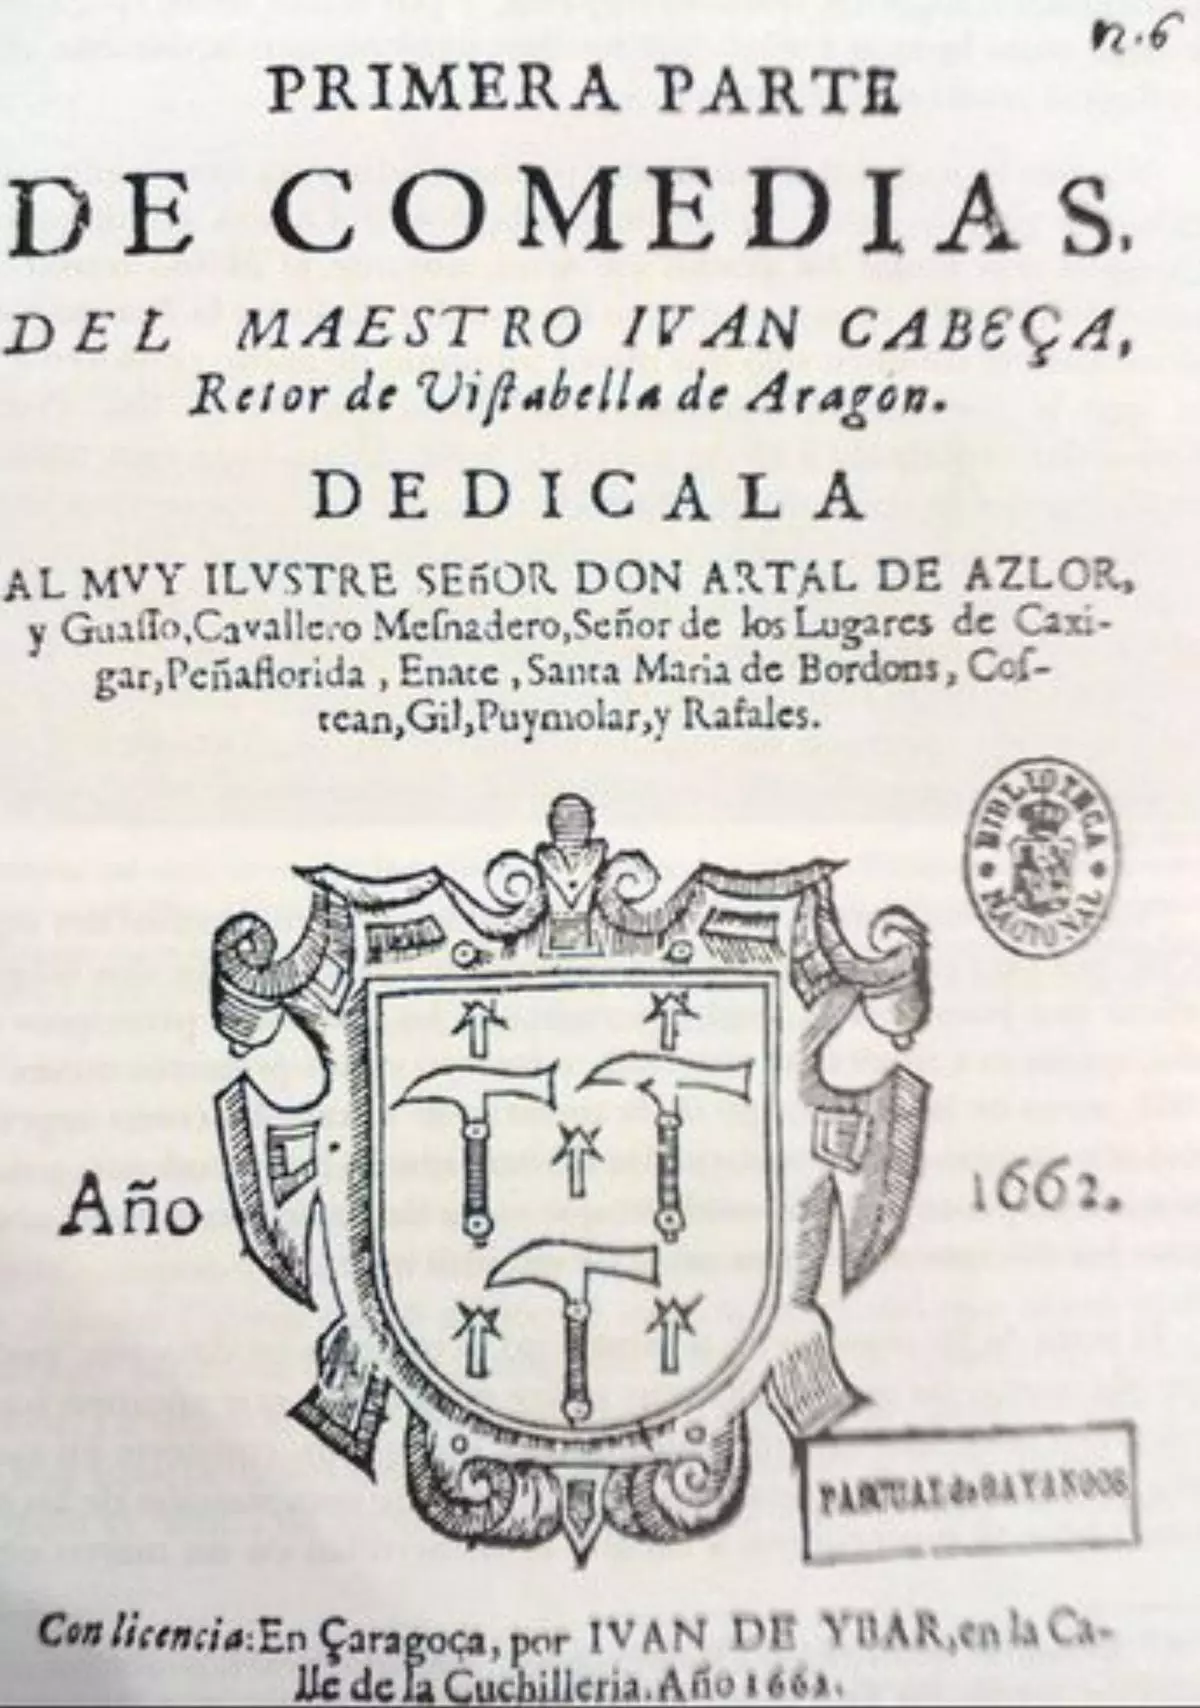 320 aniversario del maestro Juan Cabeza